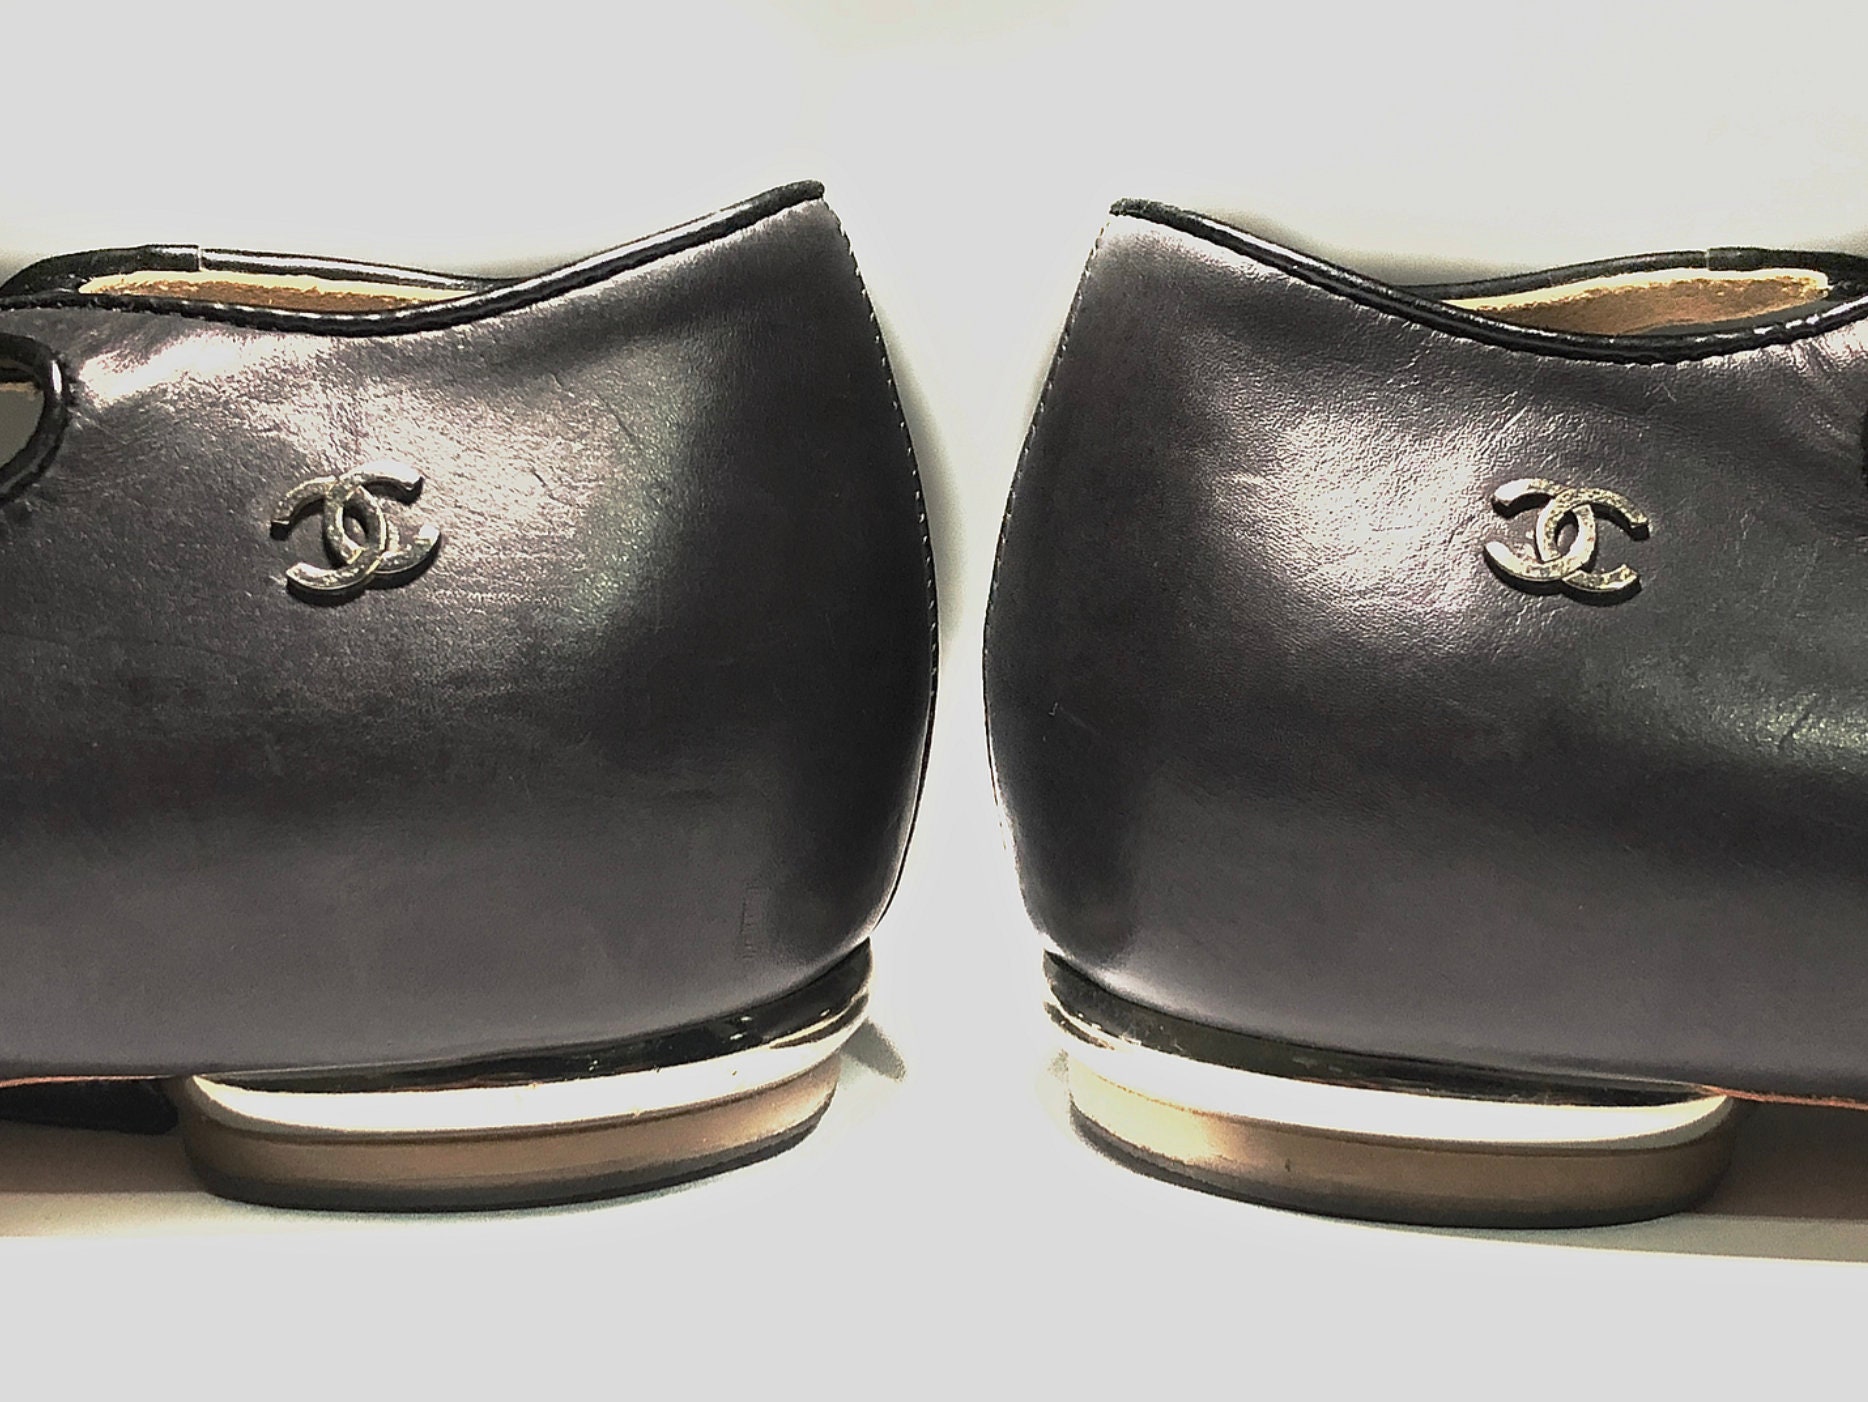 Vintage Chanel Metallic Gold Gripoix Beaded Ballet Ballerina Flats Shoes EU 36 US 5/5.5